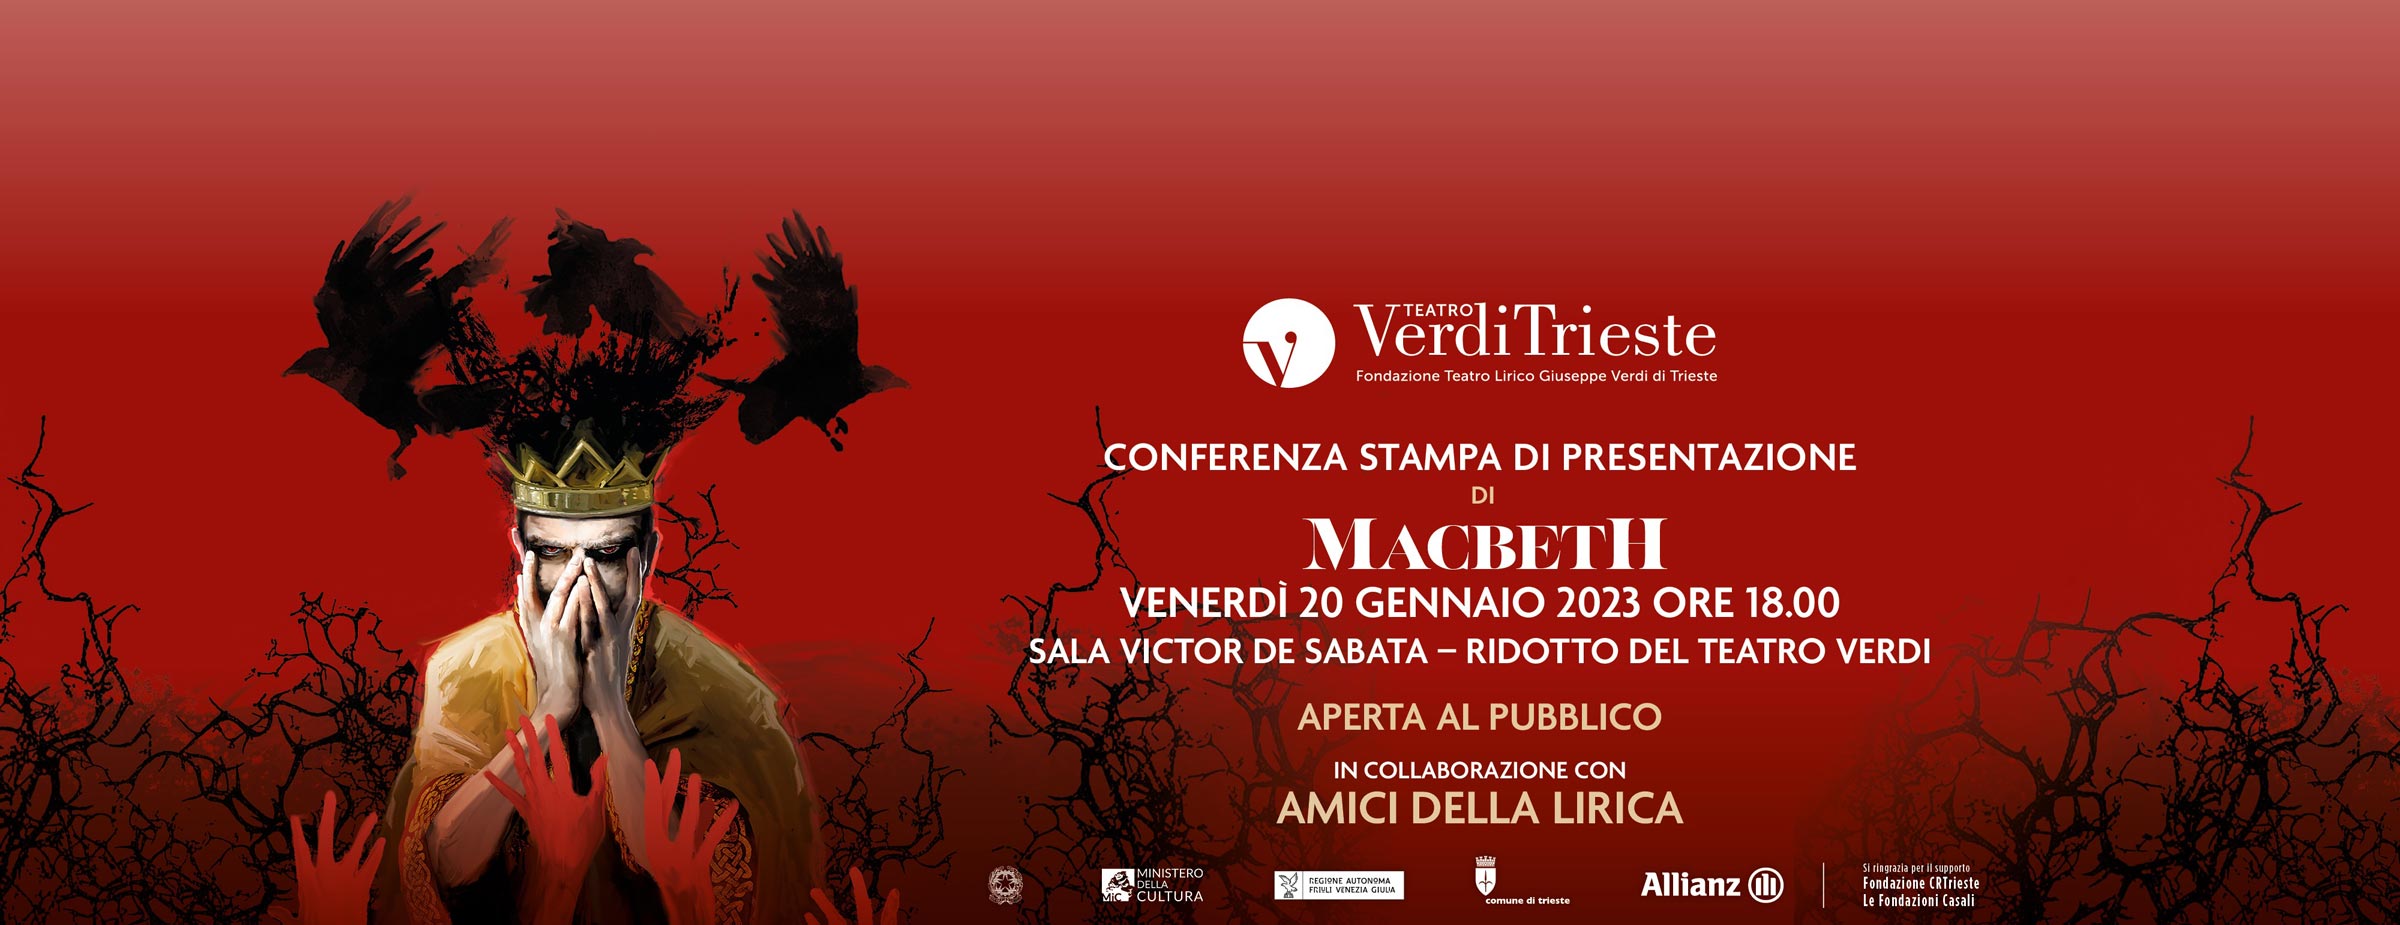 Macbeth Teatro Verdi di Trieste presentazione